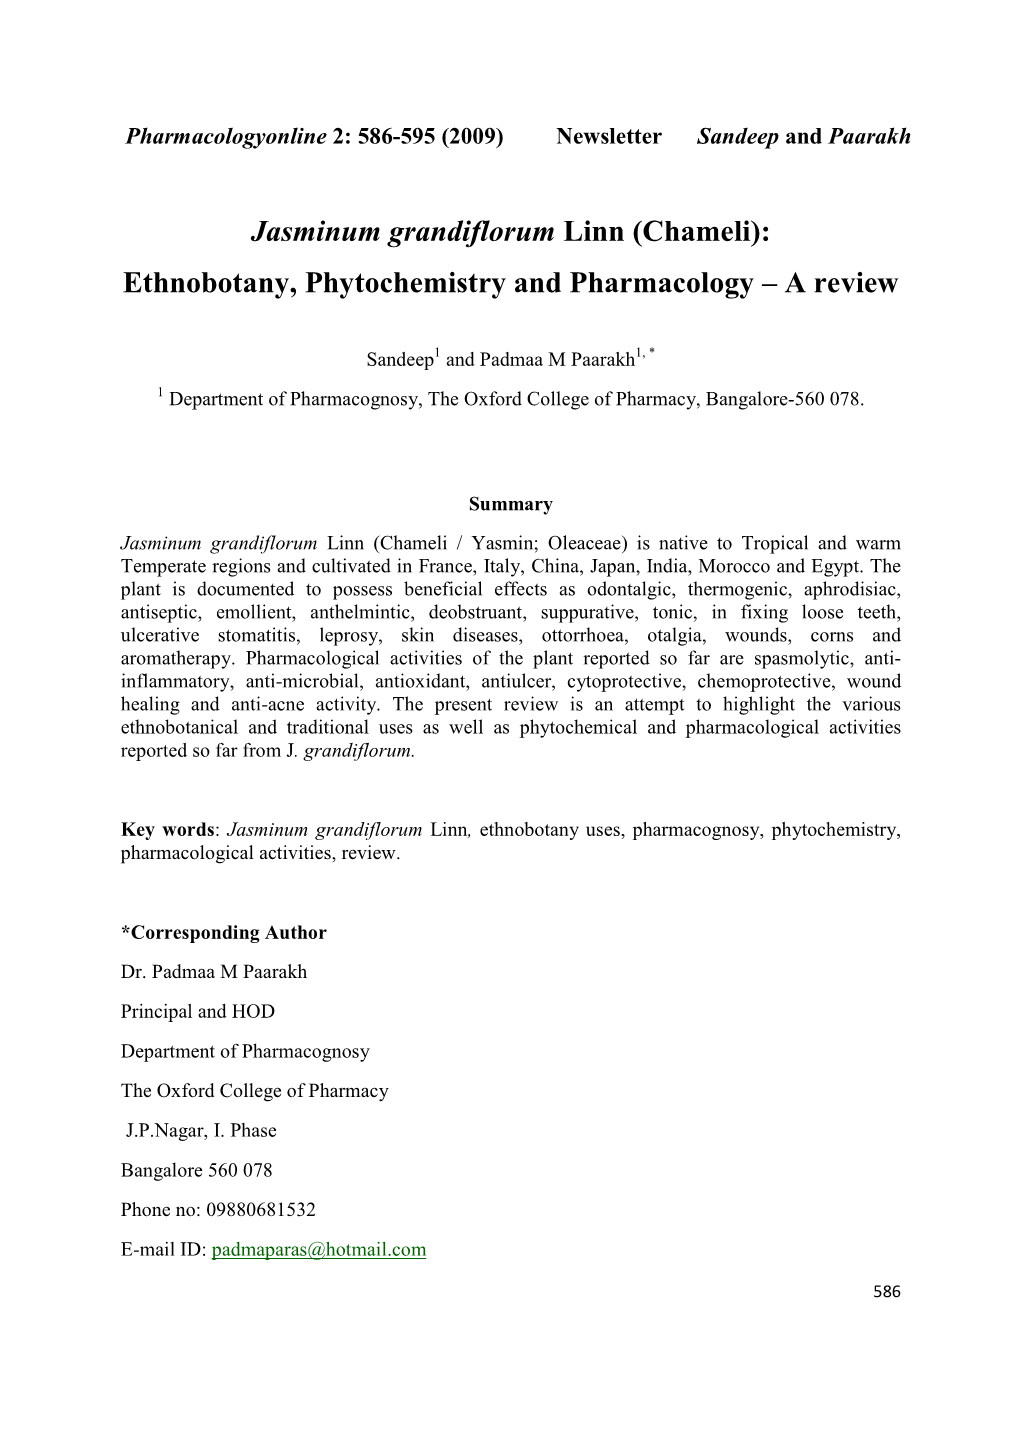 Jasminum Grandiflorum Linn (Chameli): Ethnobotany, Phytochemistry and Pharmacology – a Review